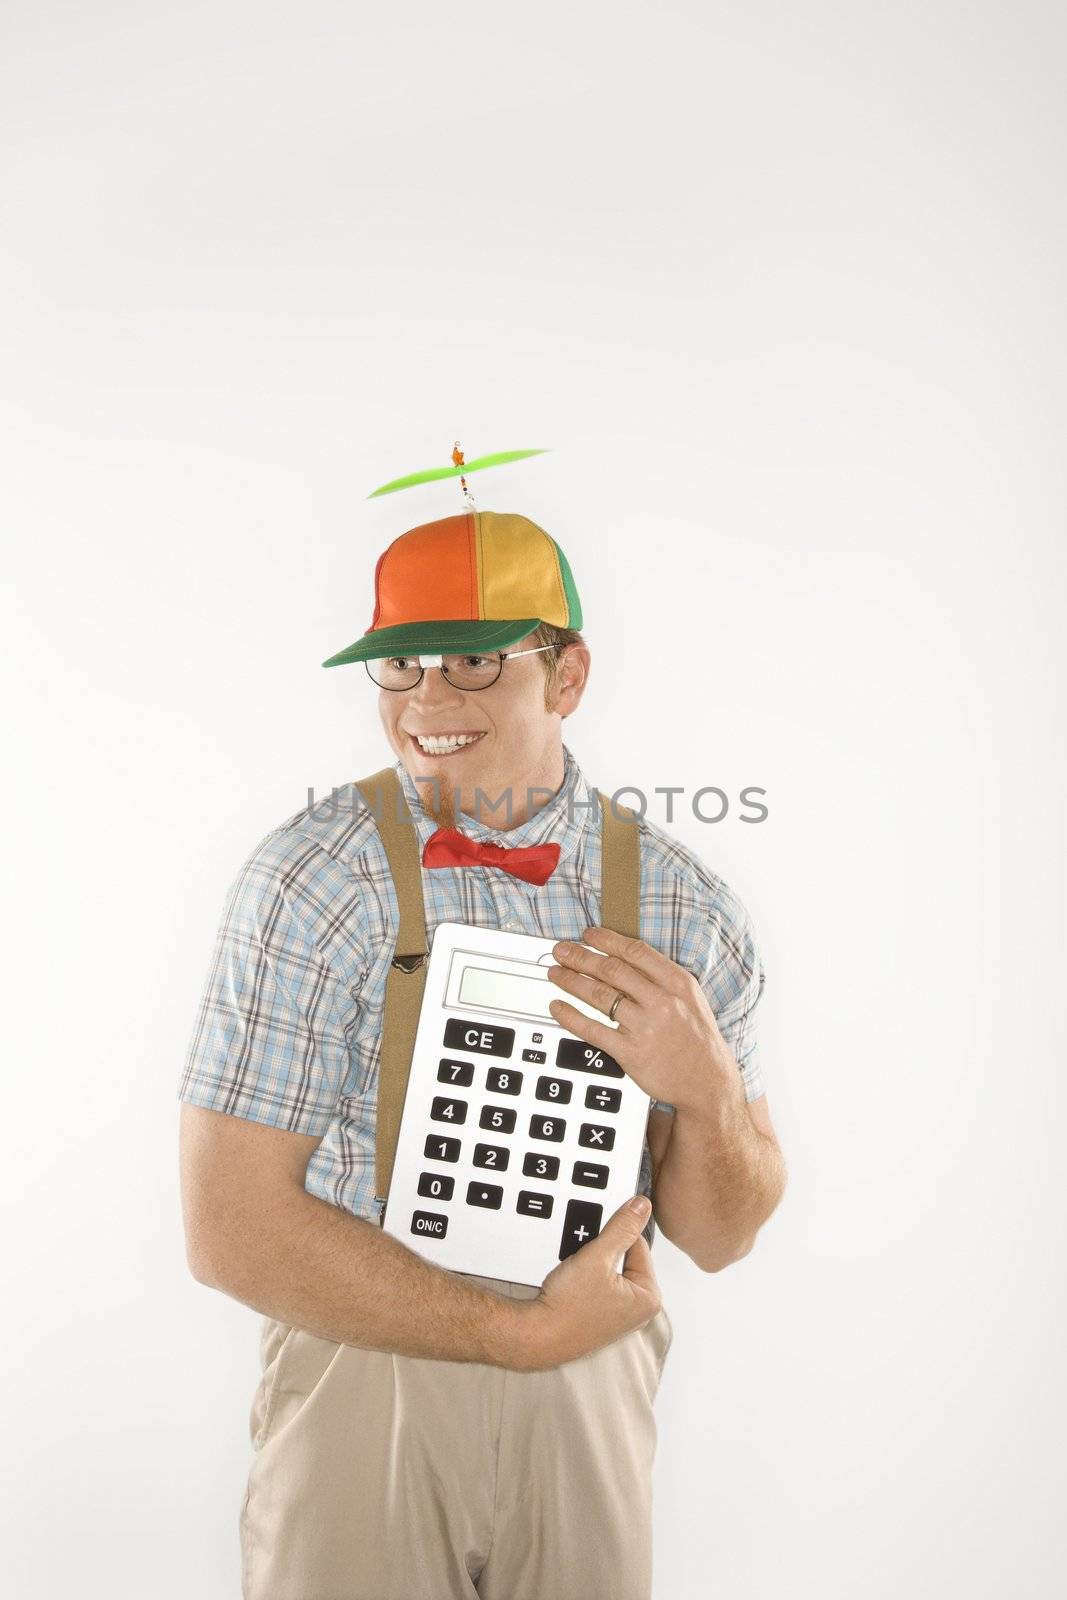 Dork holding calculator. by iofoto